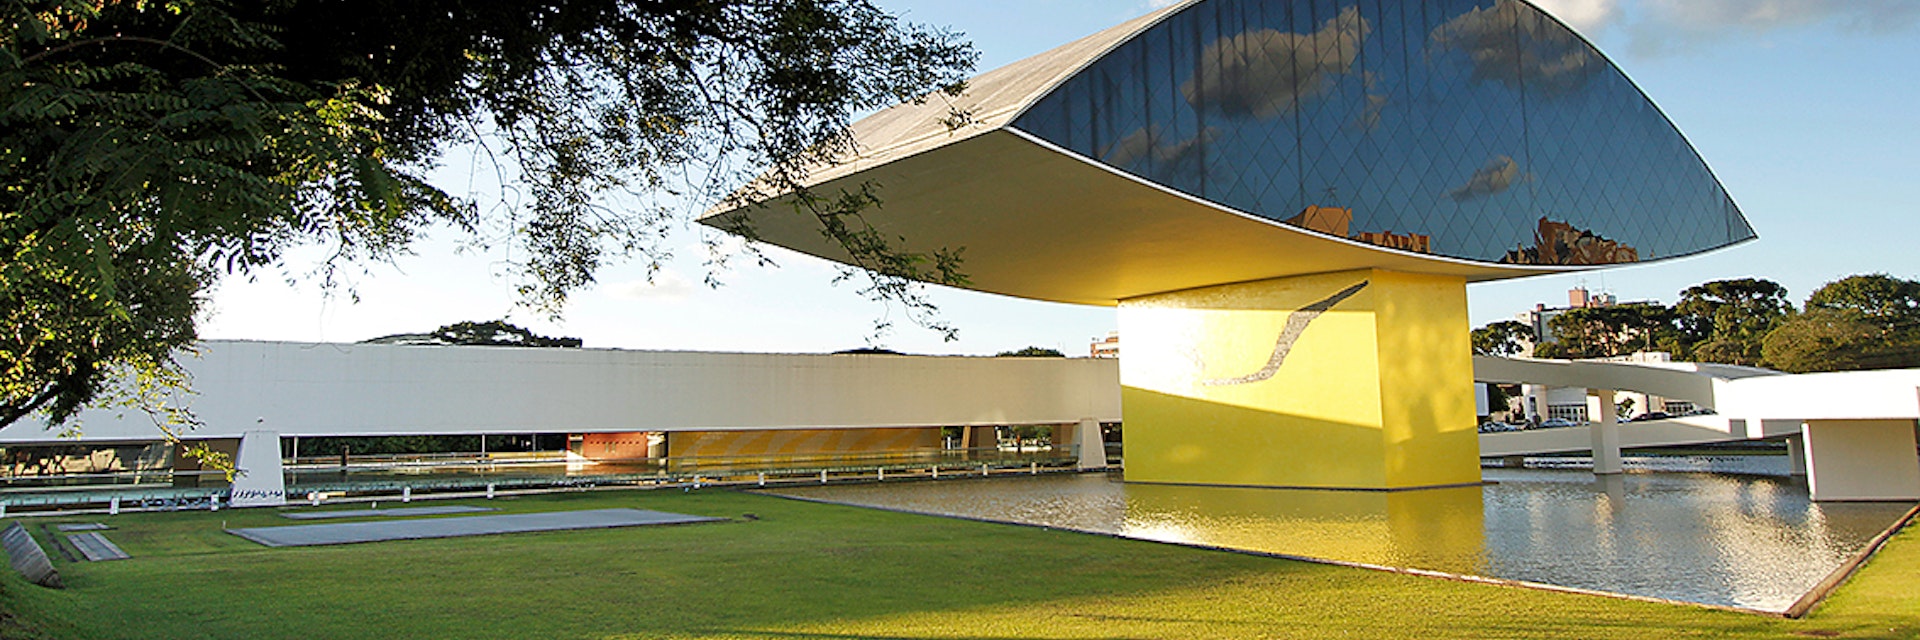 Oscar Niemeyer Museum in Curitiba, Parana State, Brazil. Cassiano Correia/Shutterstock